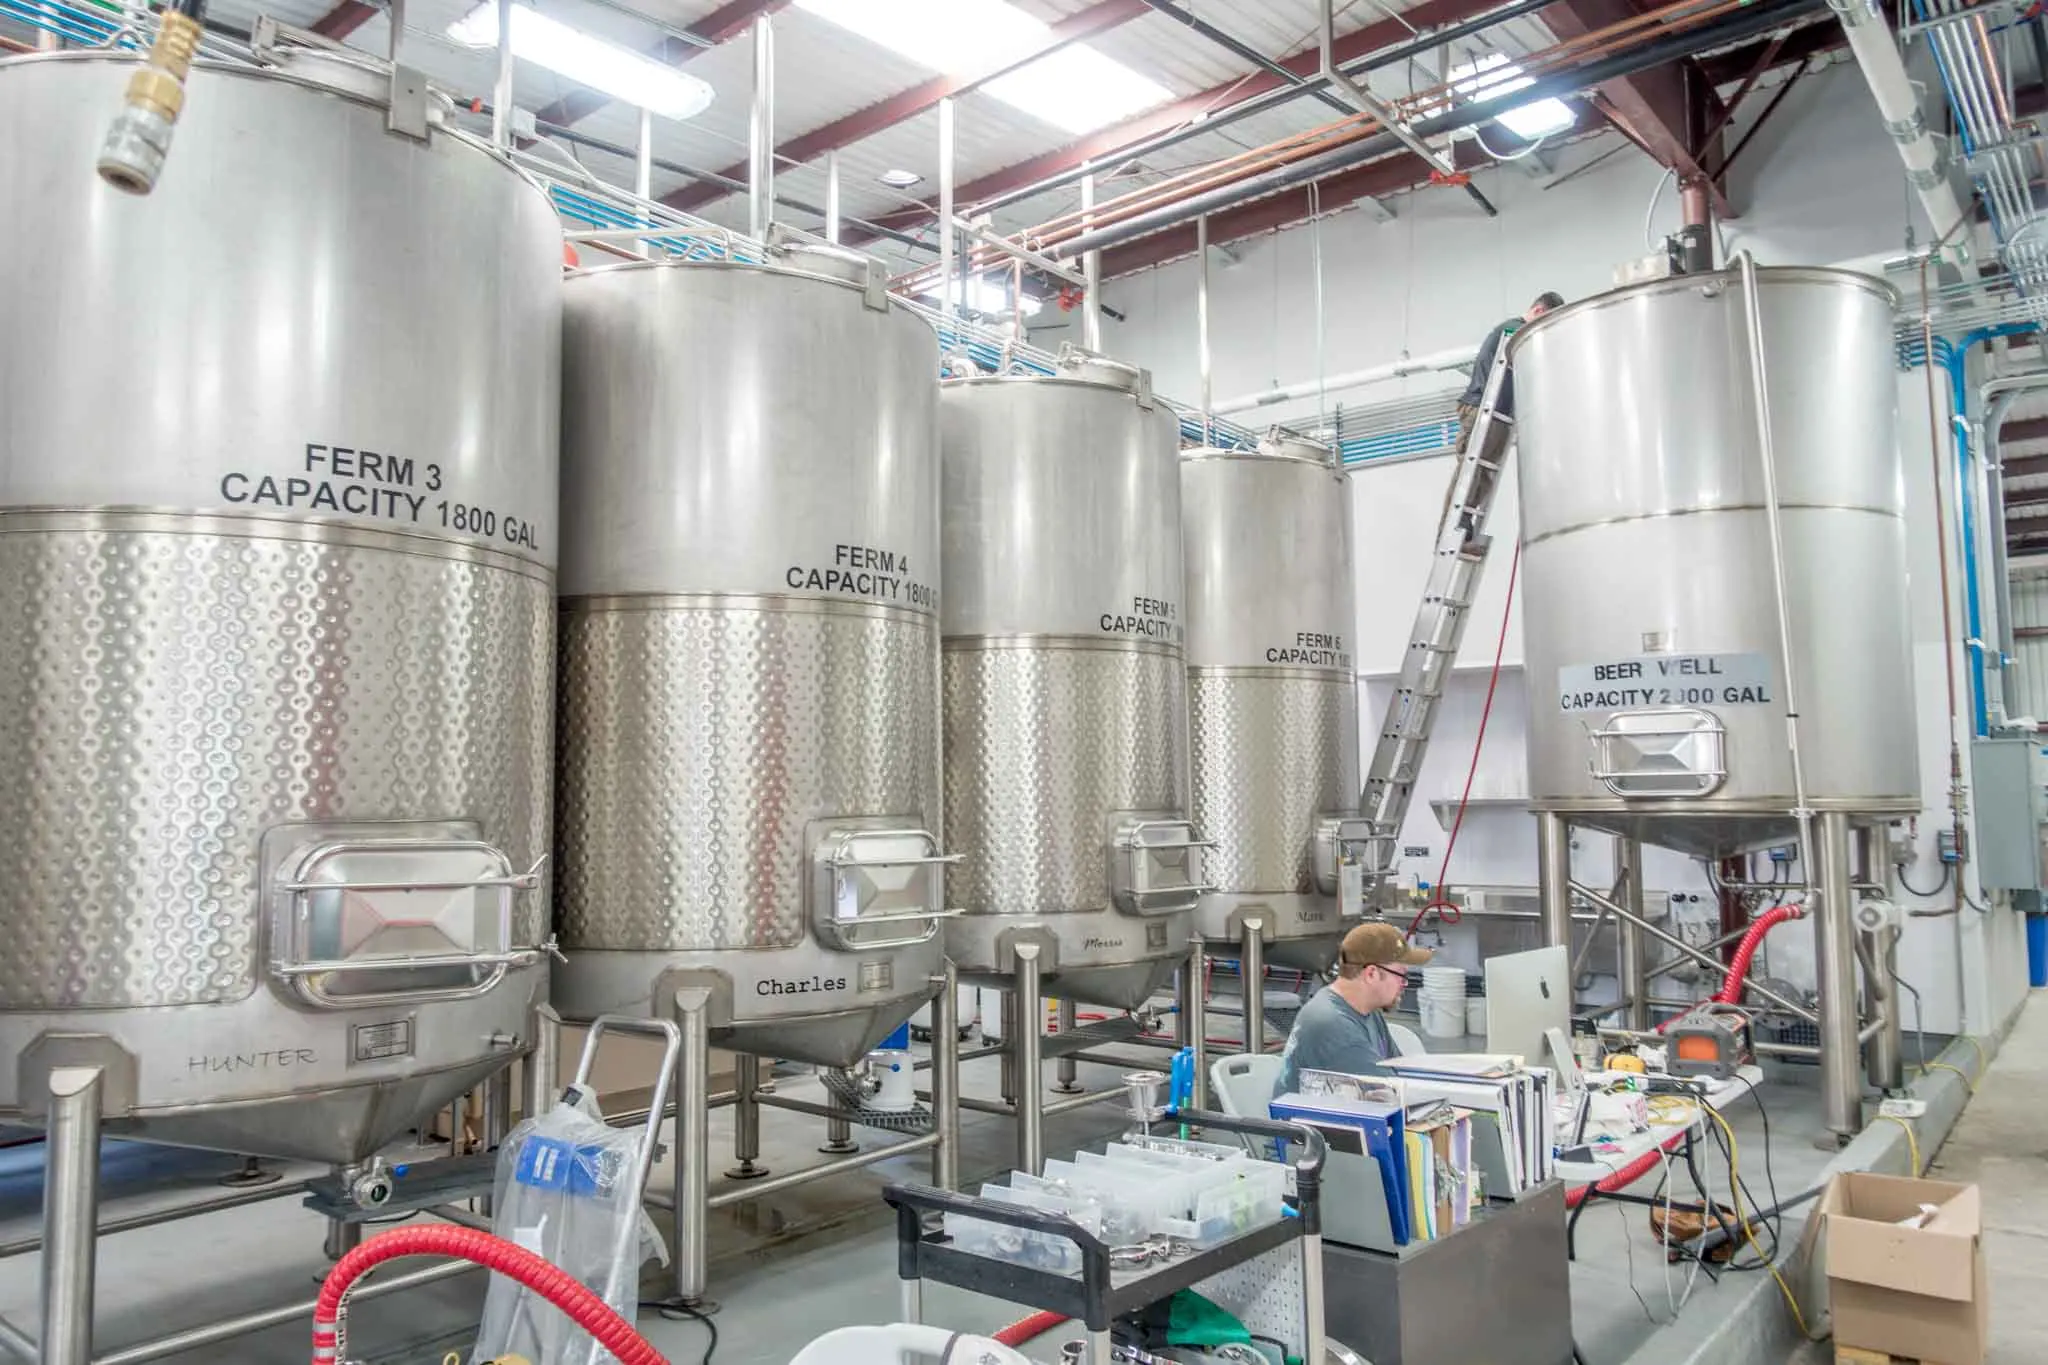 Steel fermentation tanks at a distillery